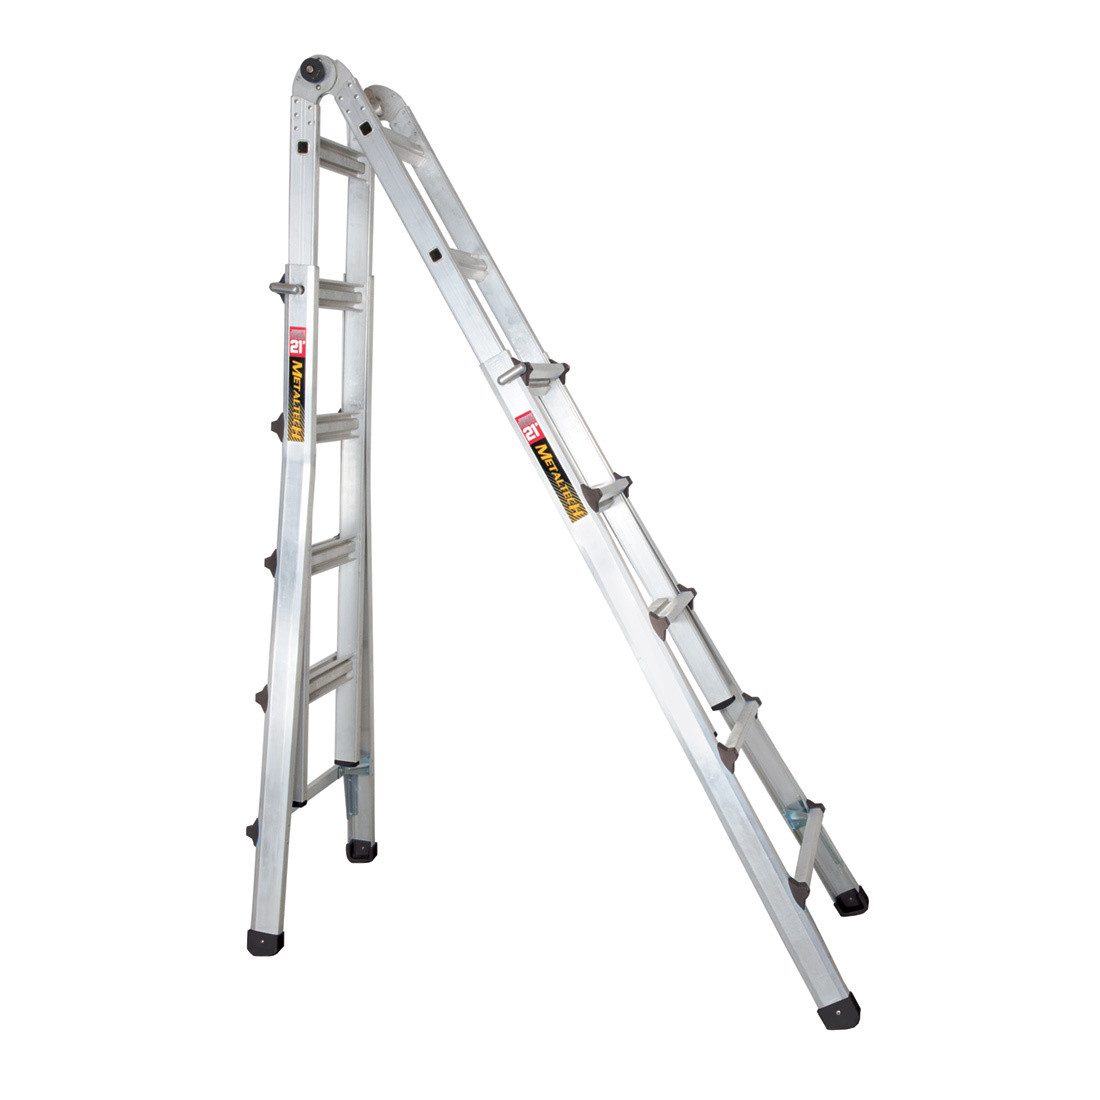 Telescoping multi-position ladder